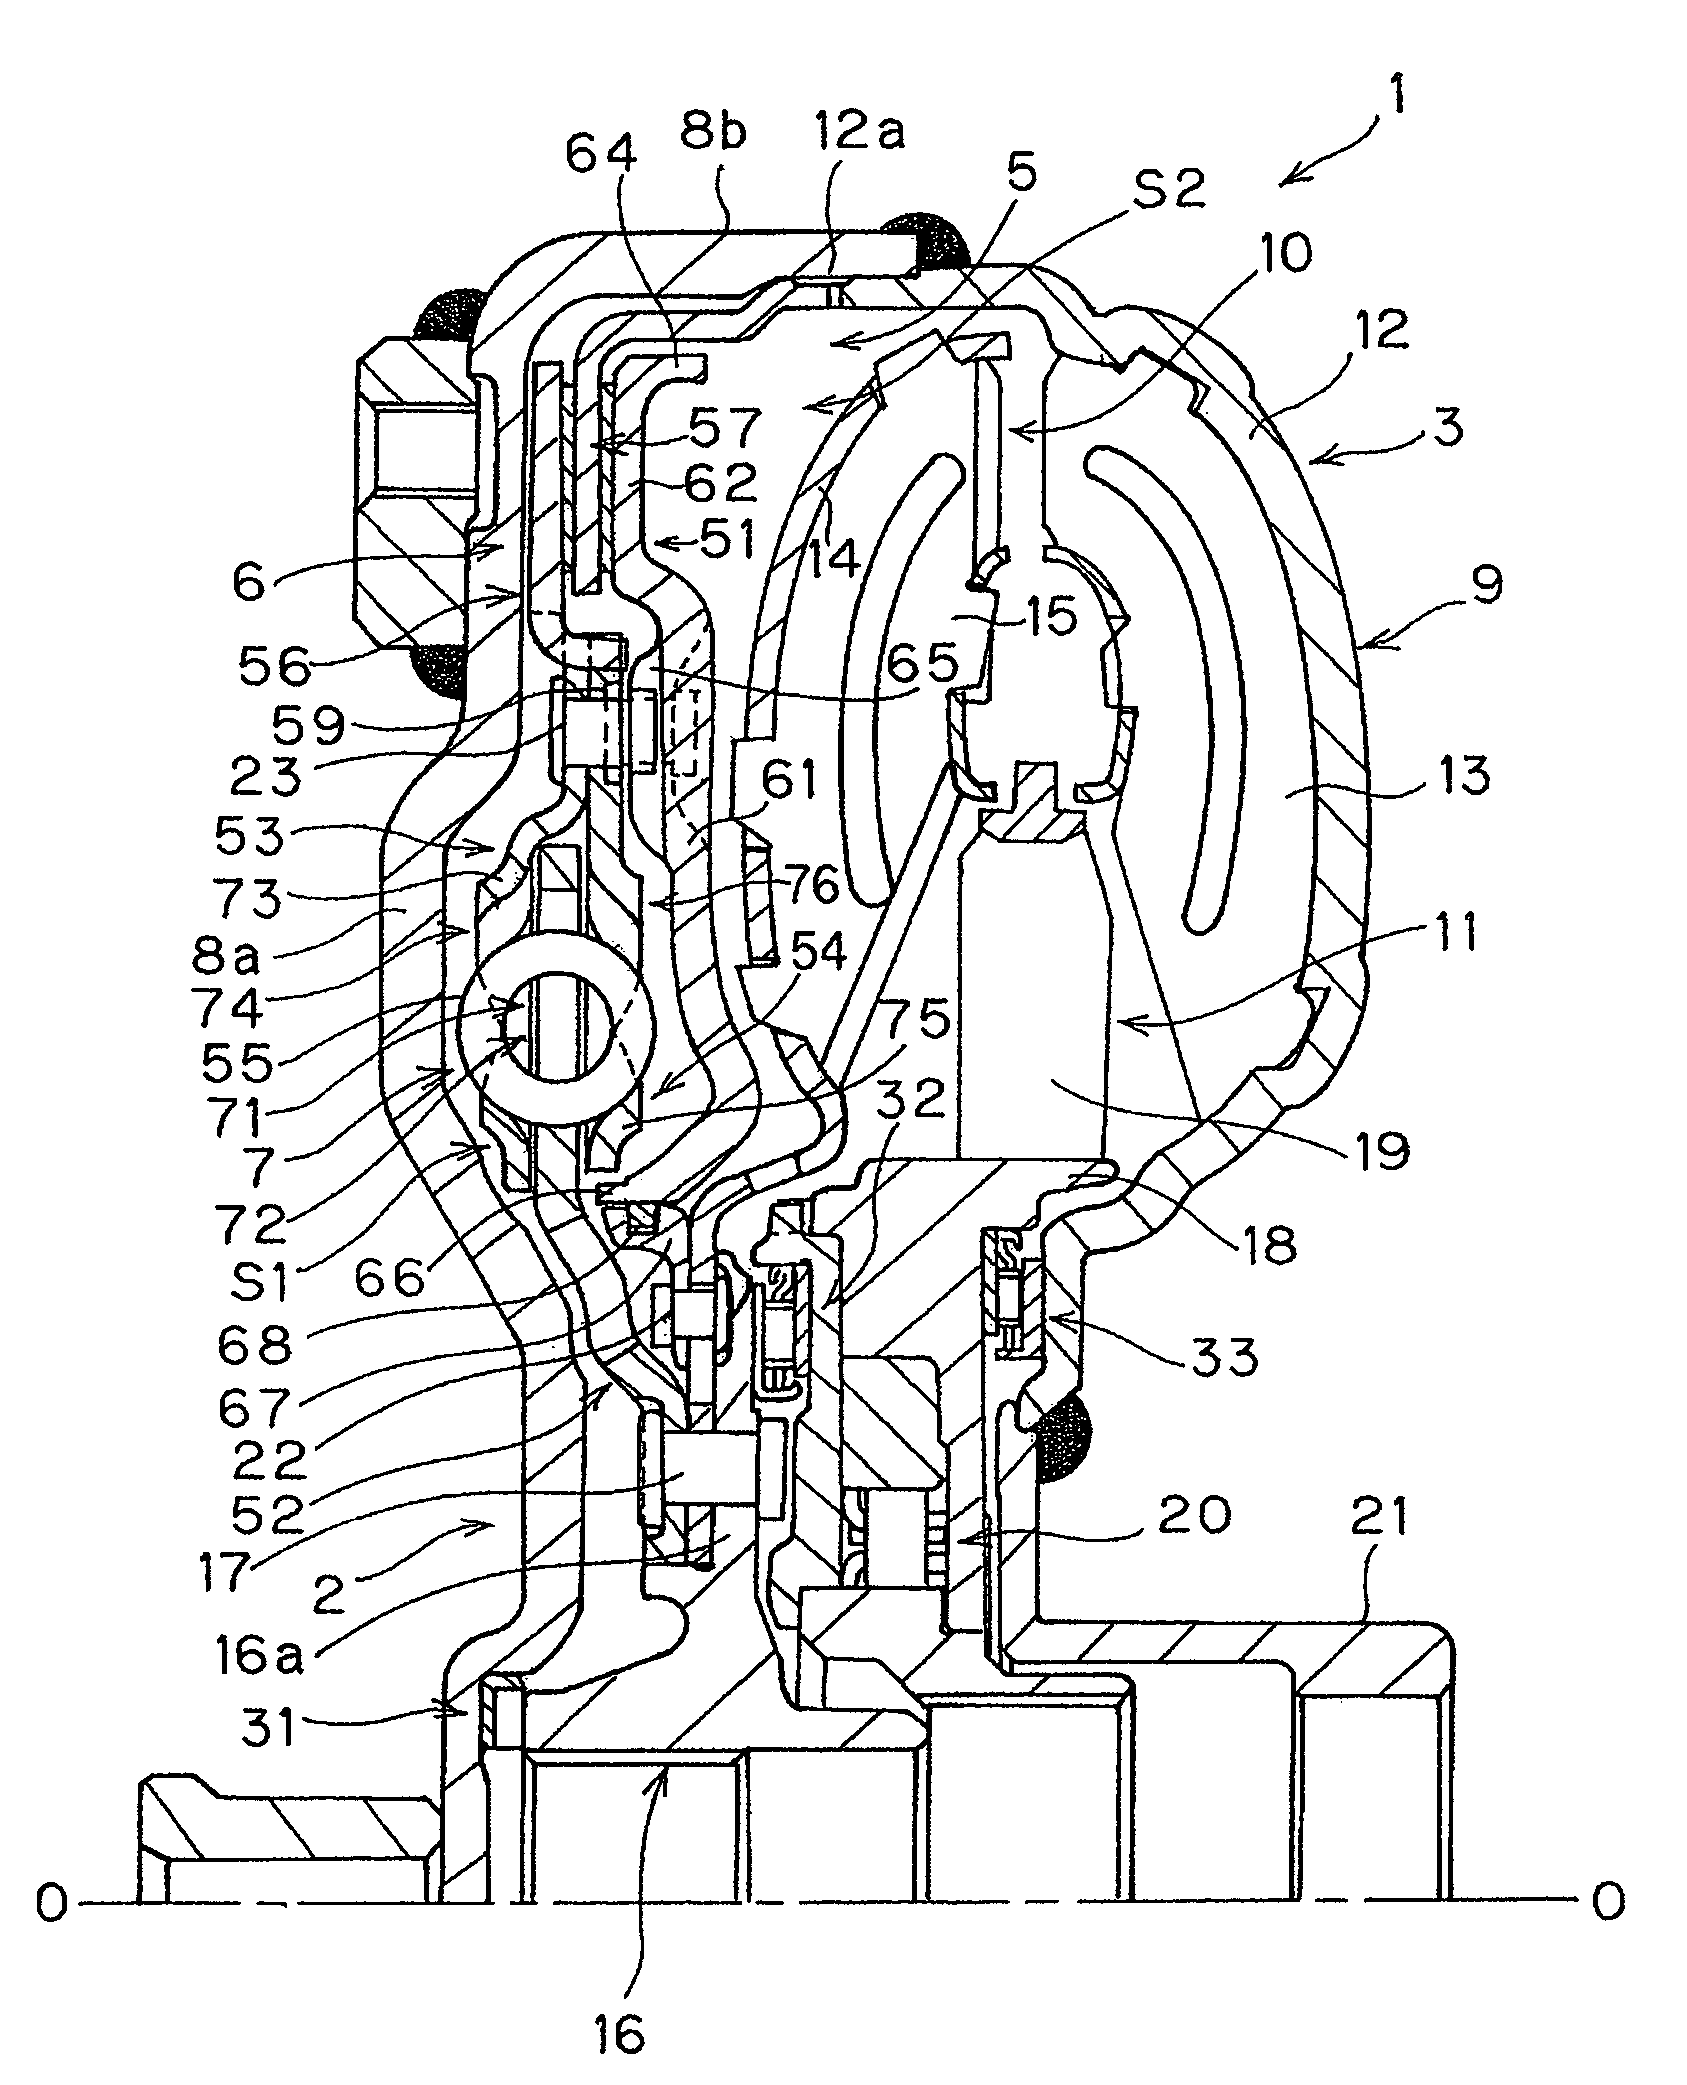 Lockup device of hydraulic torque transmission device